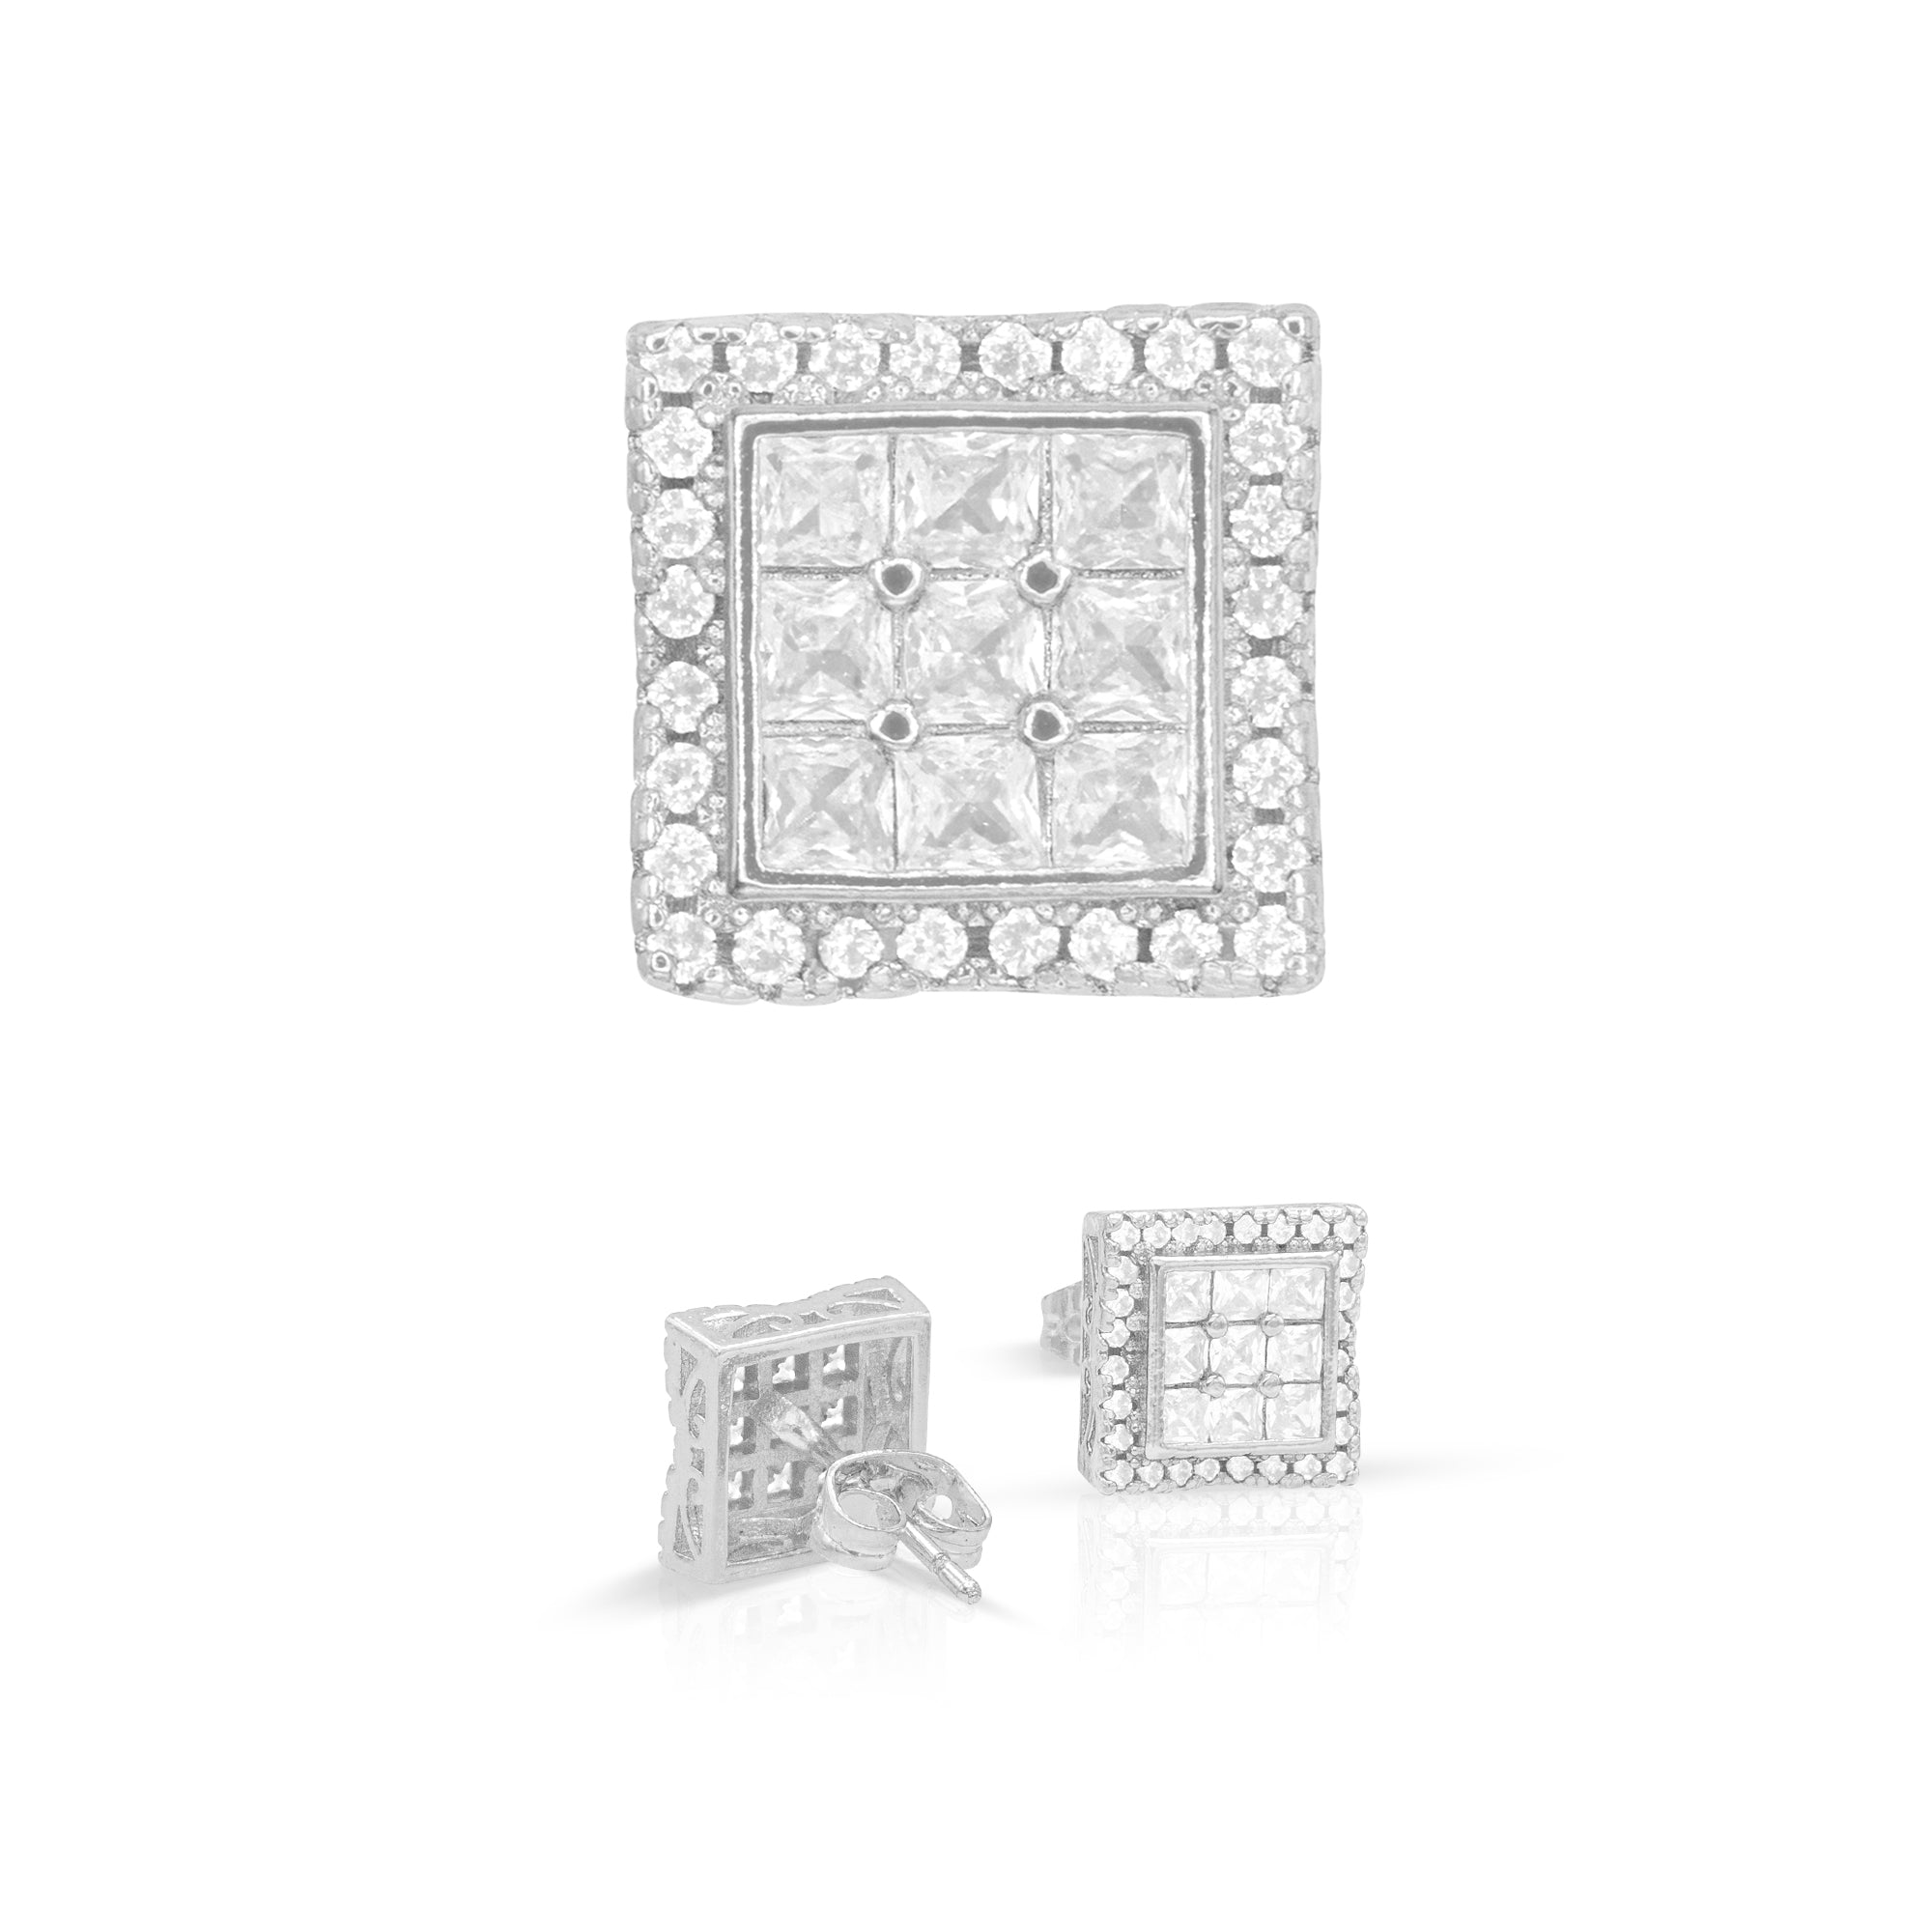 Double Square 3 Cubic Zirconia Earrings 14K Gold Filled Silver Hip Hop Studs Jewelry Women Men